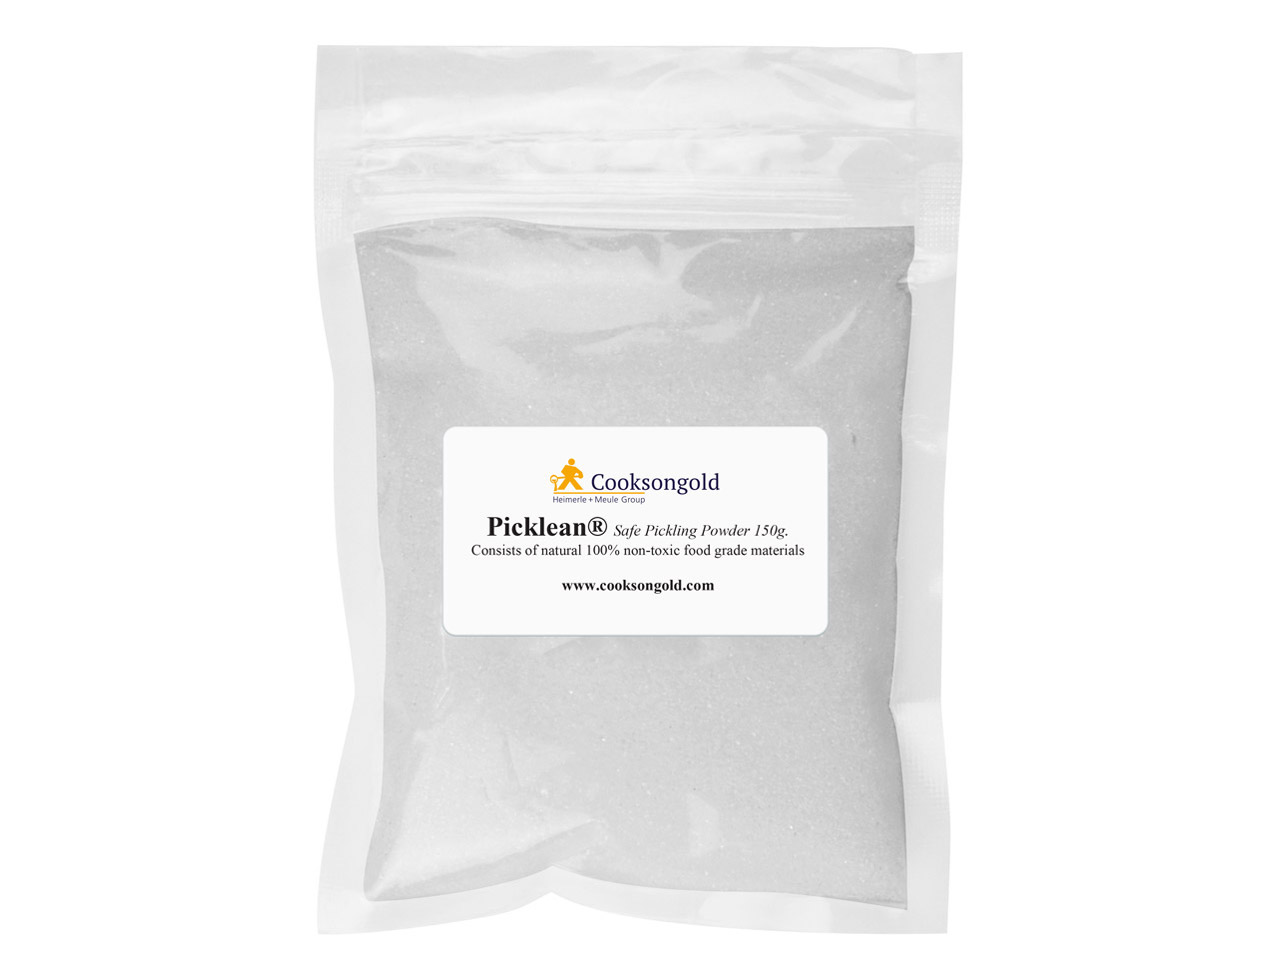 Do you have a safety data sheet for Picklean Safe Pickling Powder 150g?